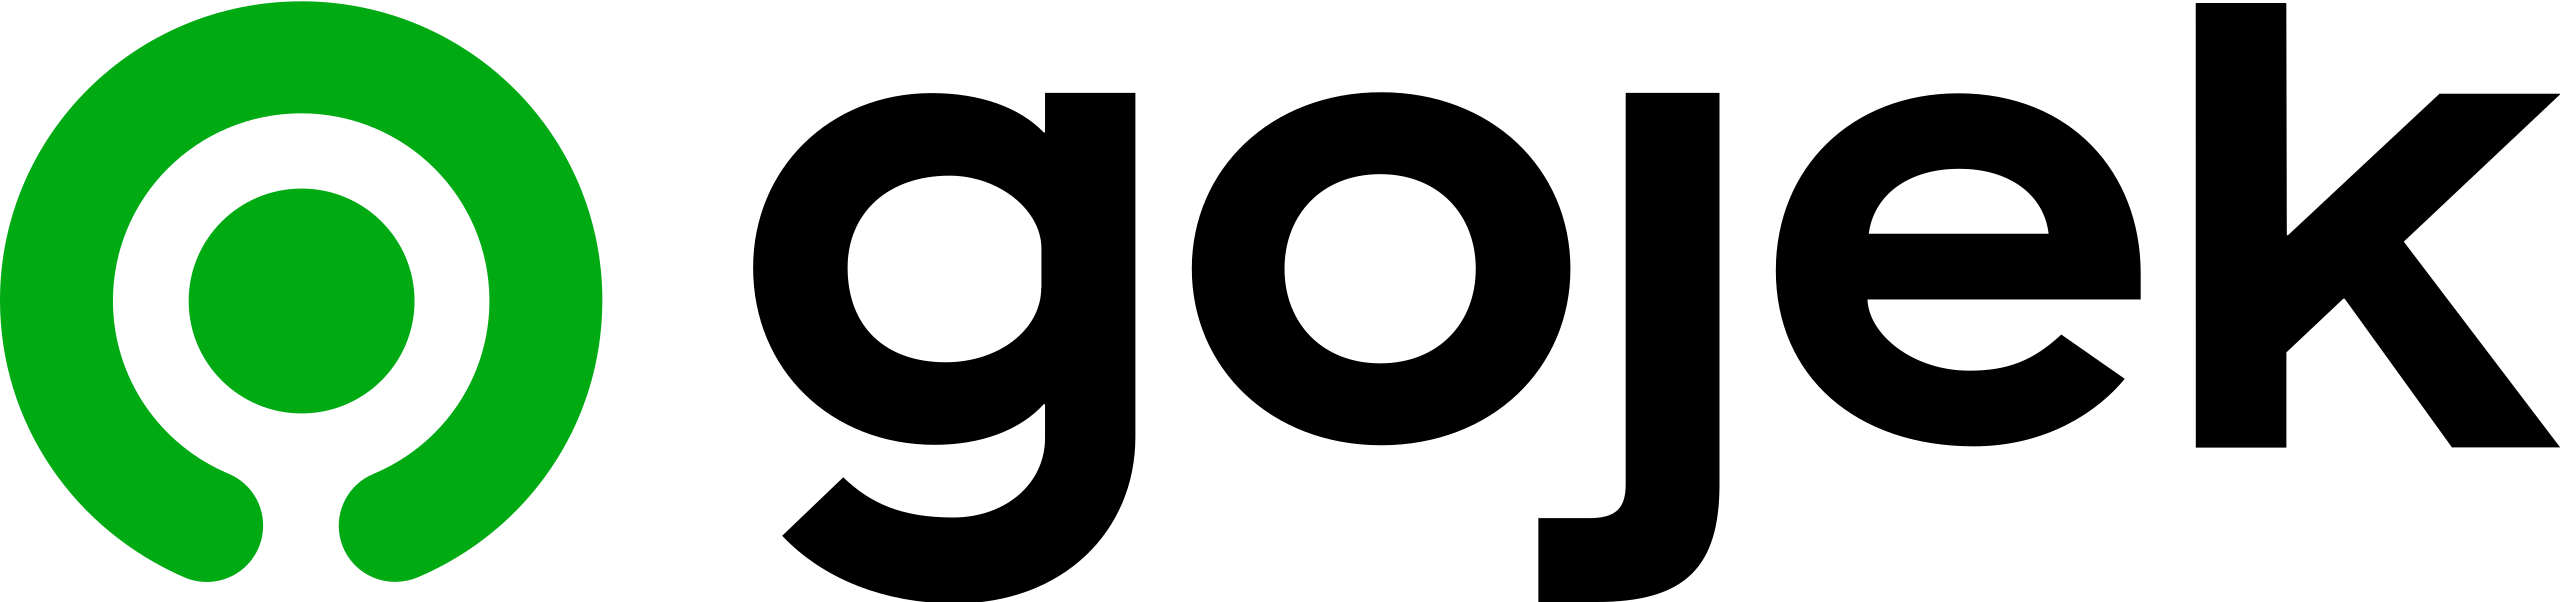 Gojek Logo - Gojek logo 2019.svg